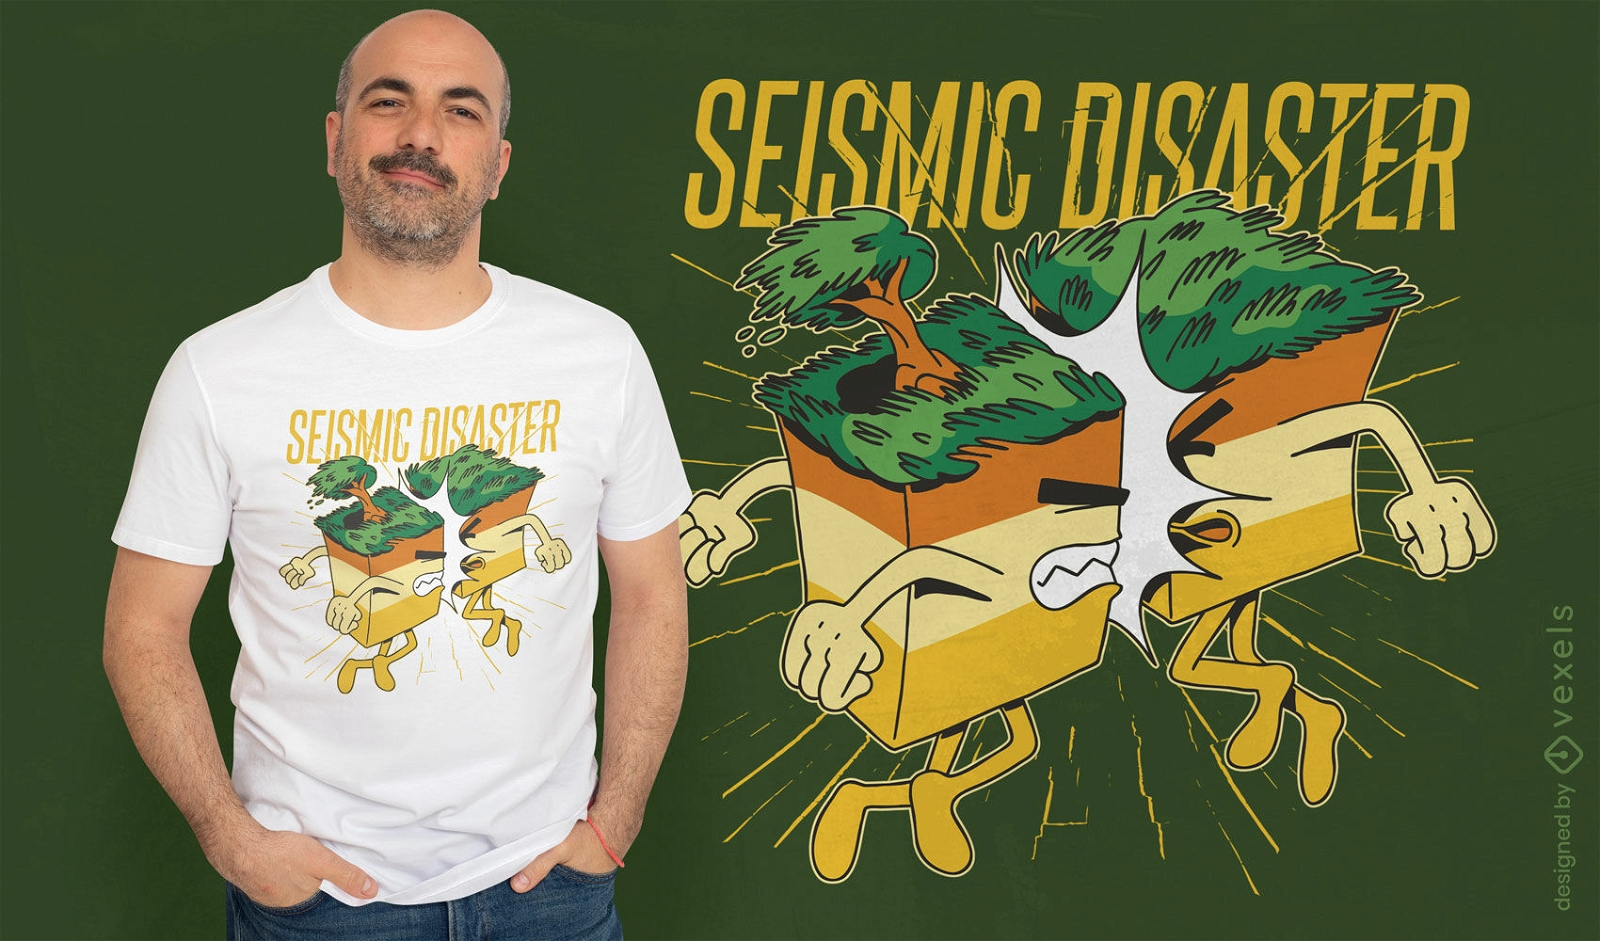 Tectonic plates bumping t-shirt design